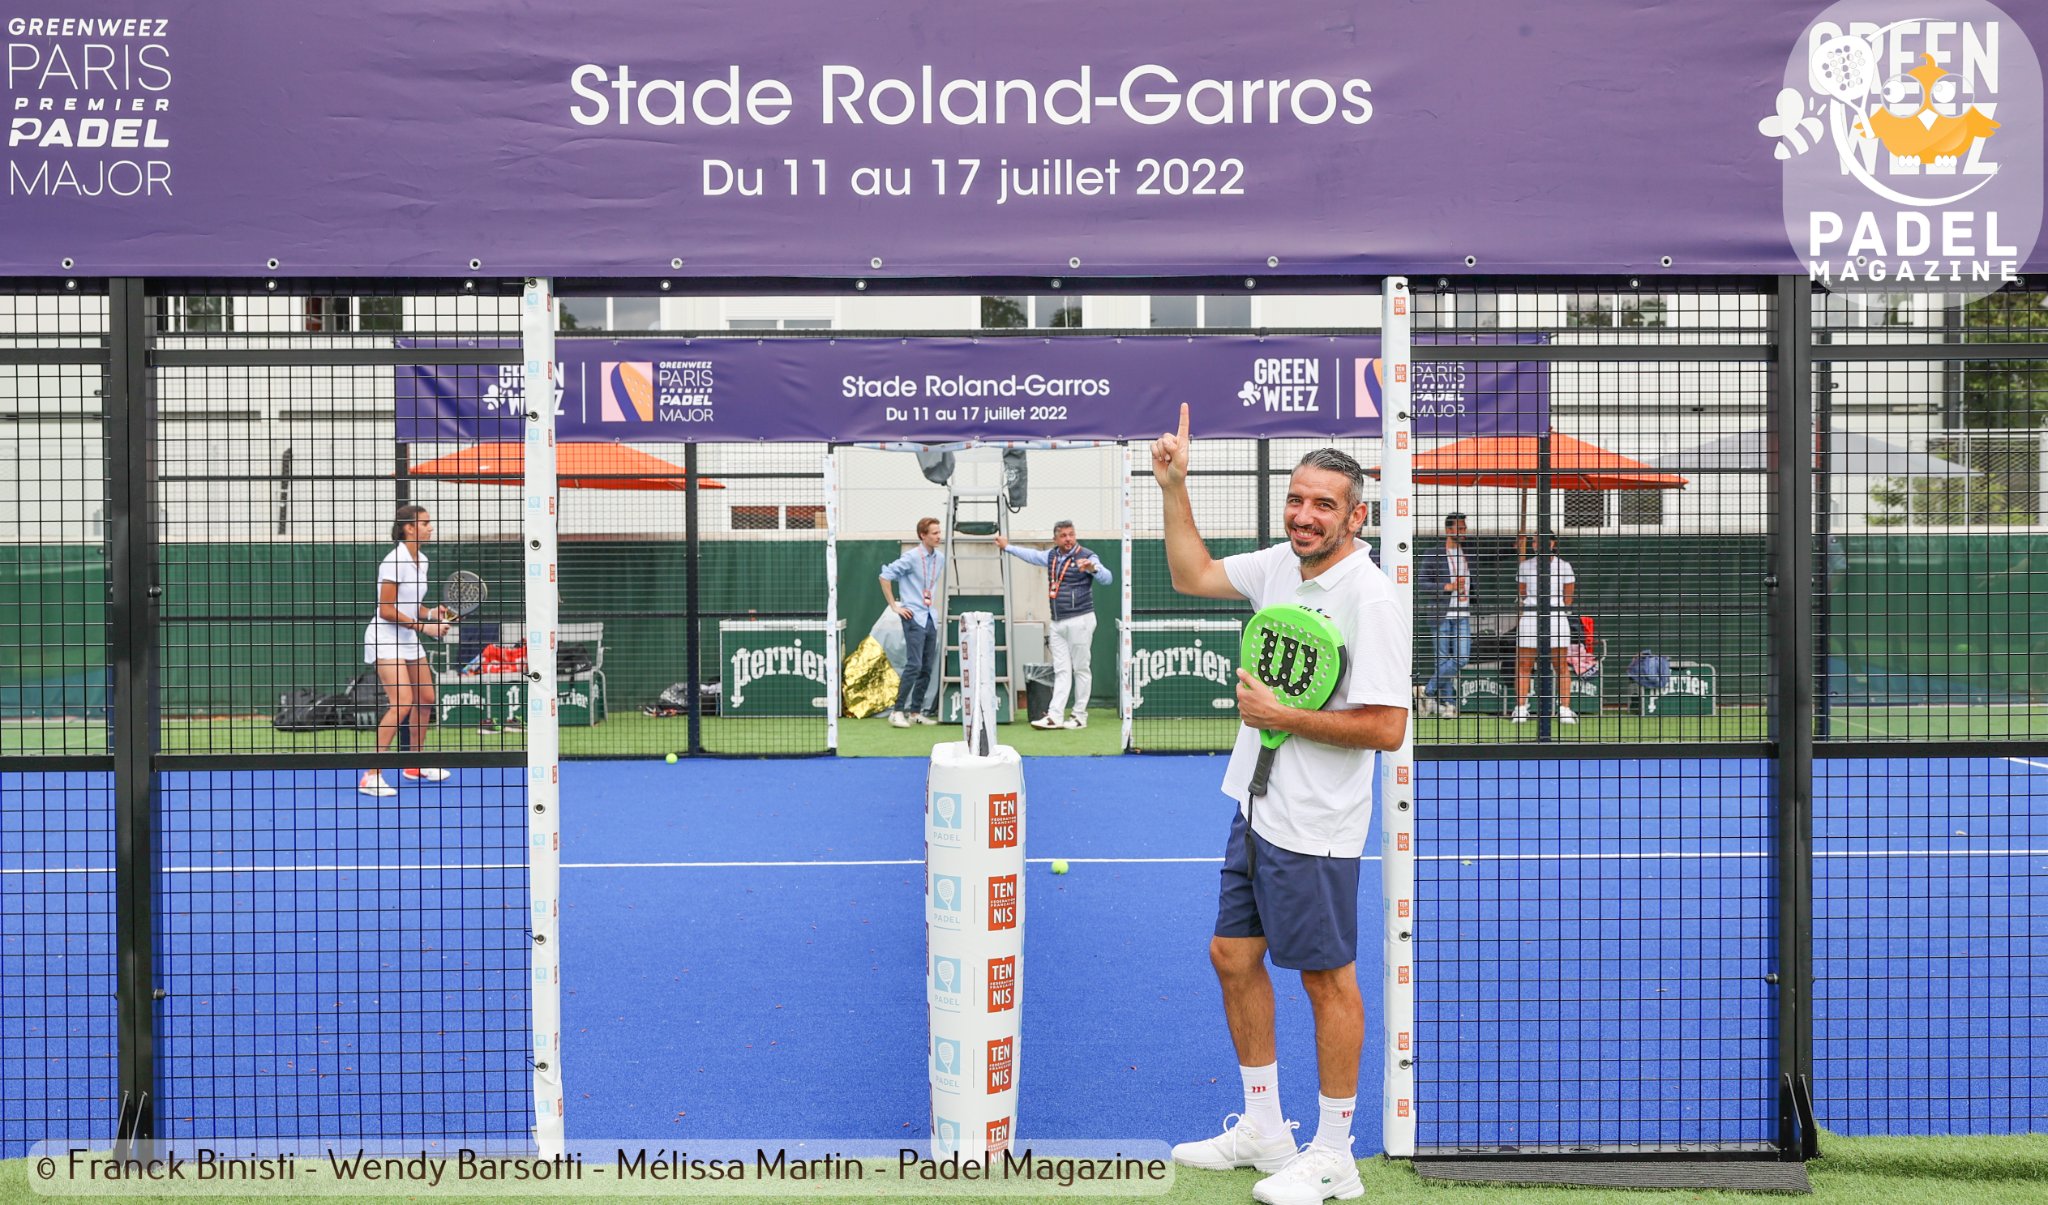 Roland Garros-stadion greenweez paris premier padel major